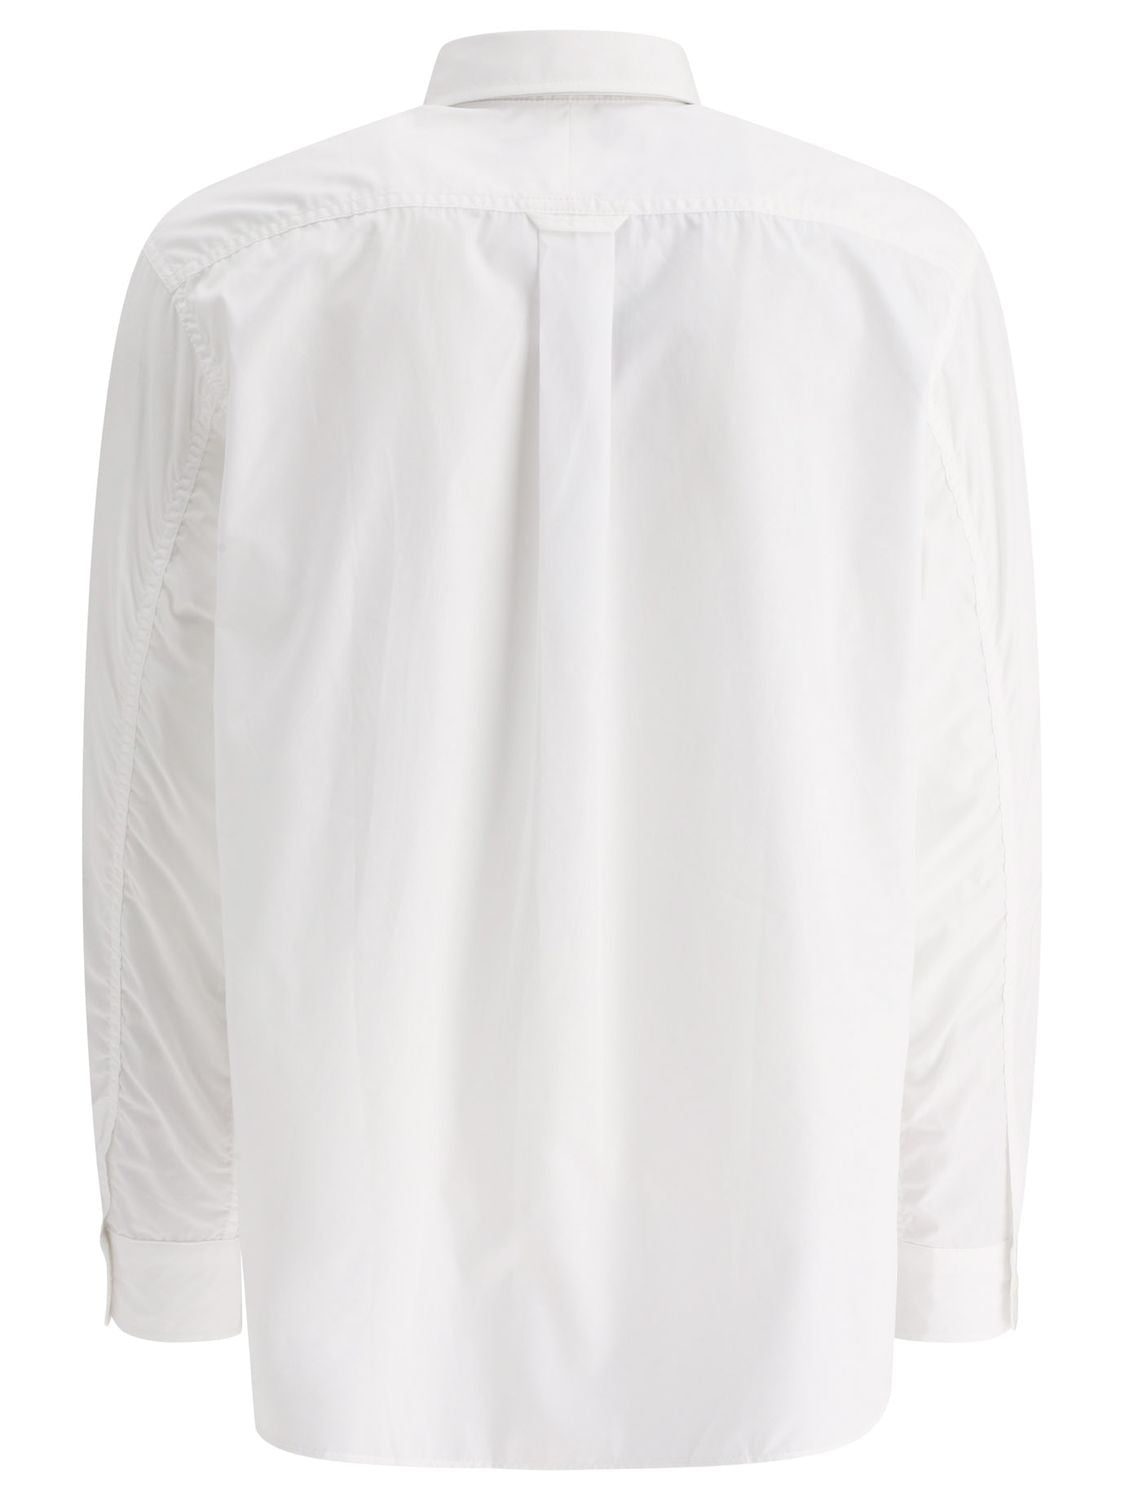 JUNYA WATANABE MAN Patchwork Shirt for Men in White for SS24 Season